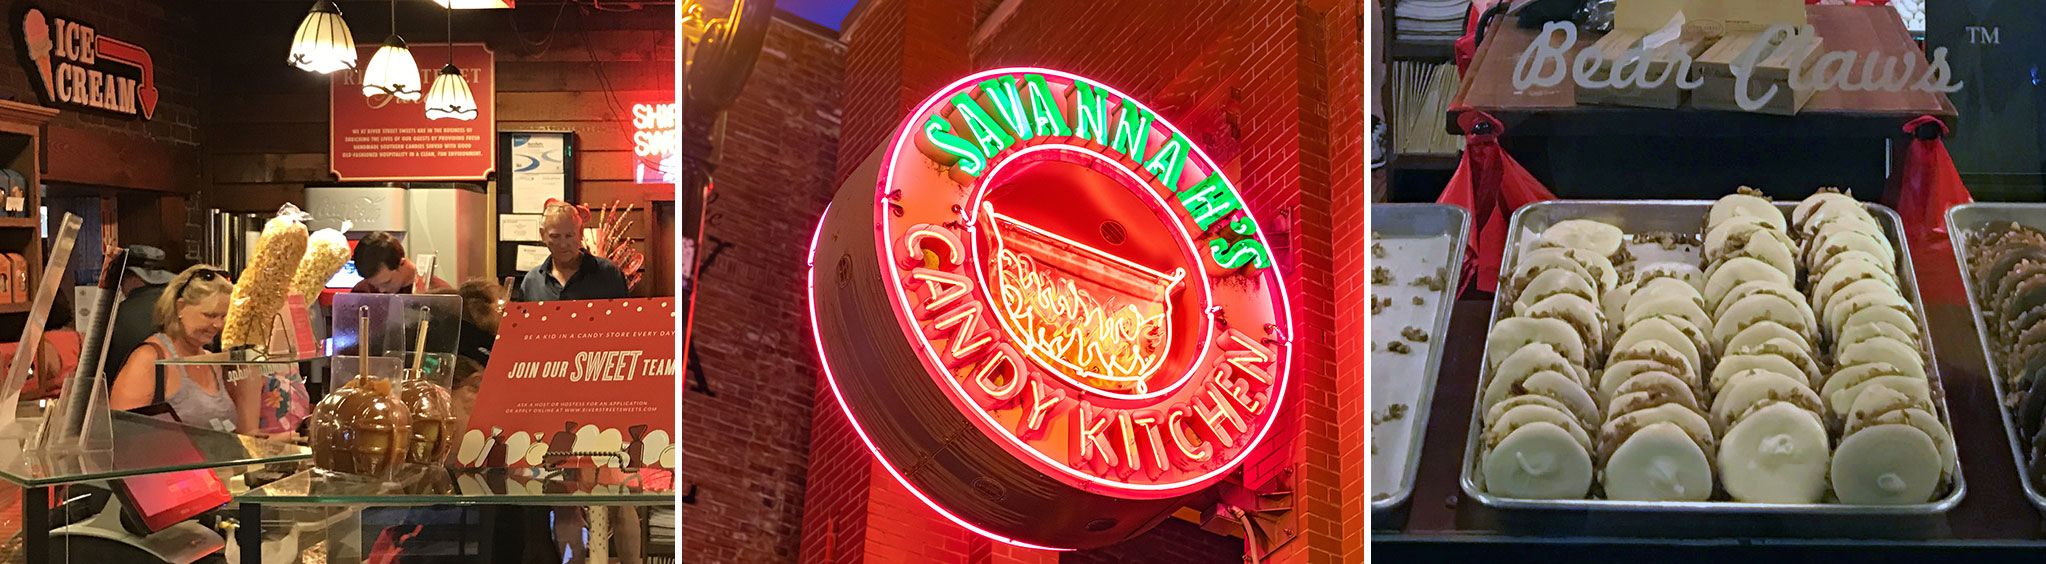 Savannah's Candy Kitchen in Nashville, TN